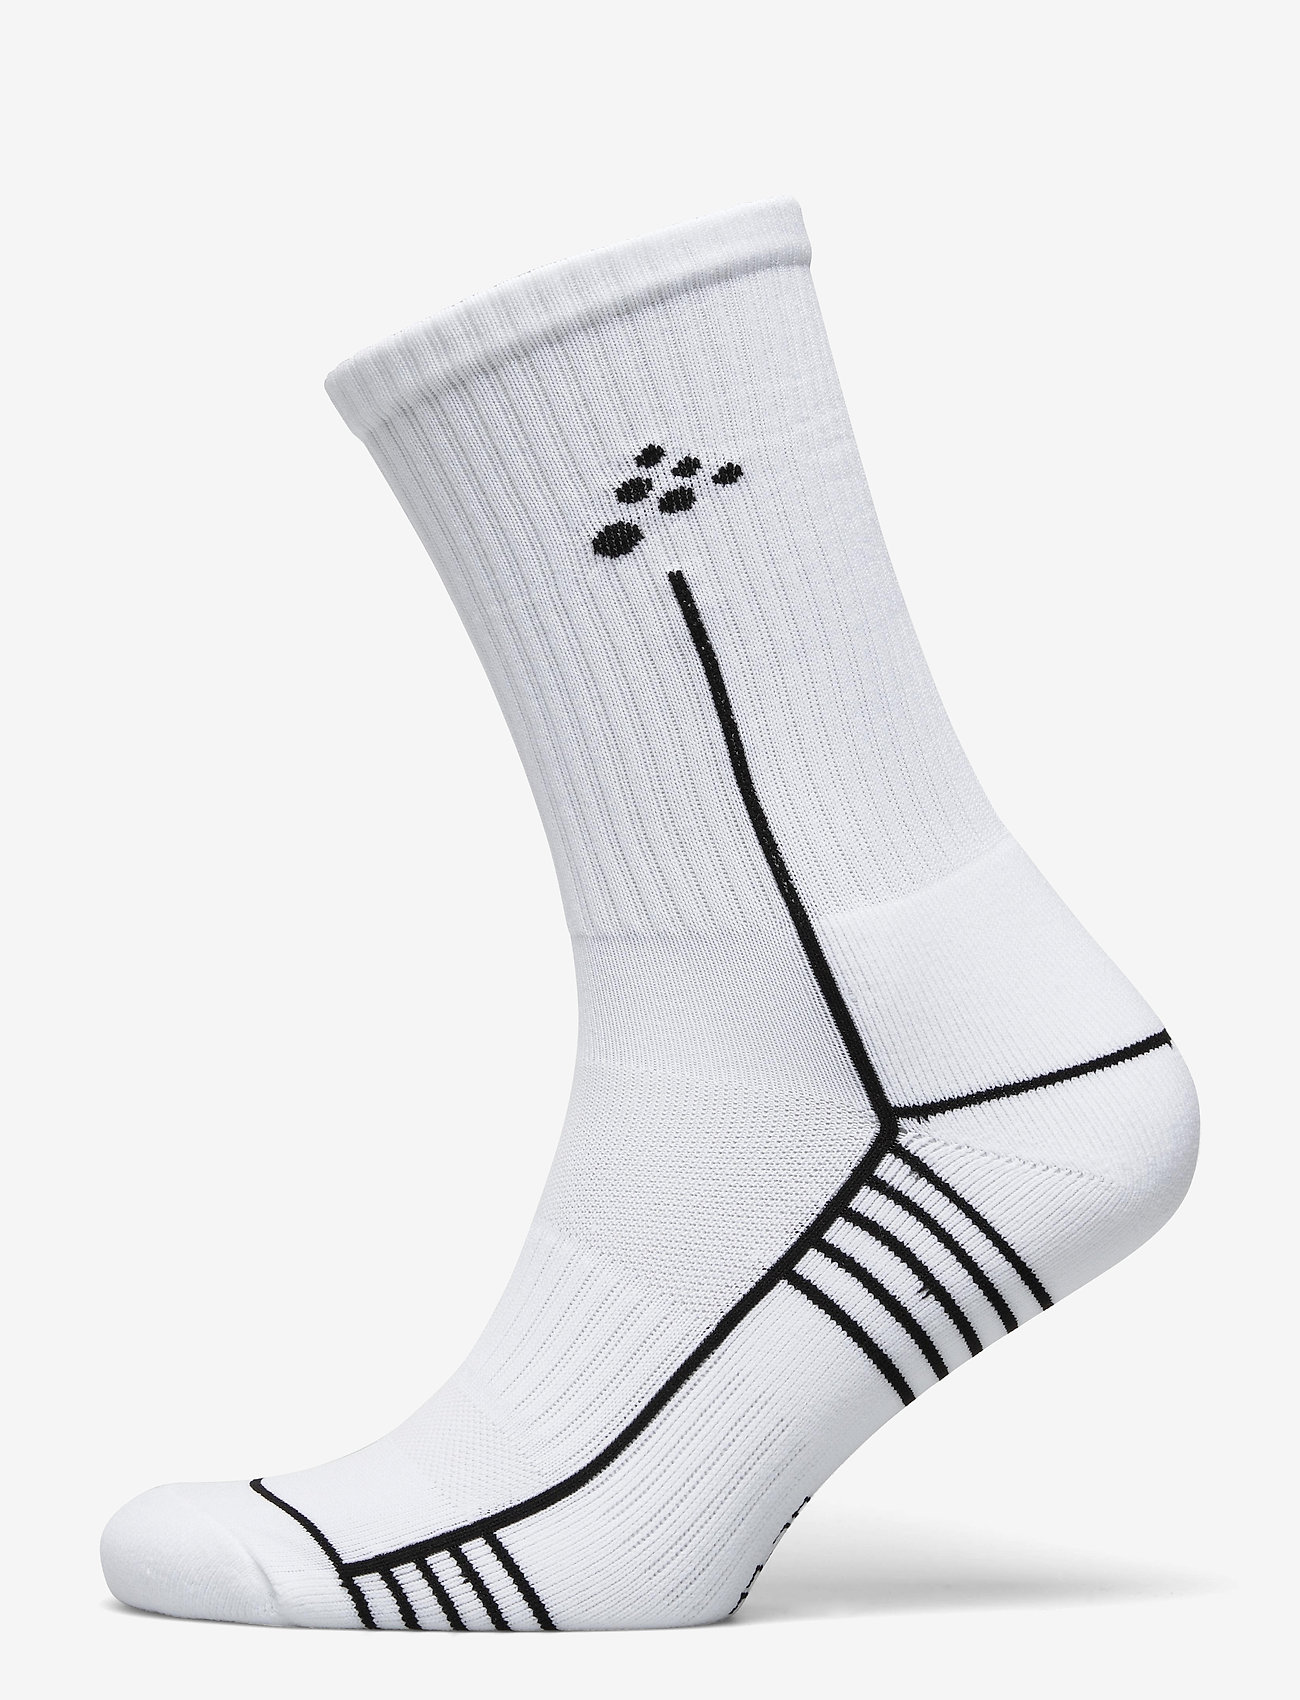 Craft - Progress Mid Sock - løbeudstyr - white - 0